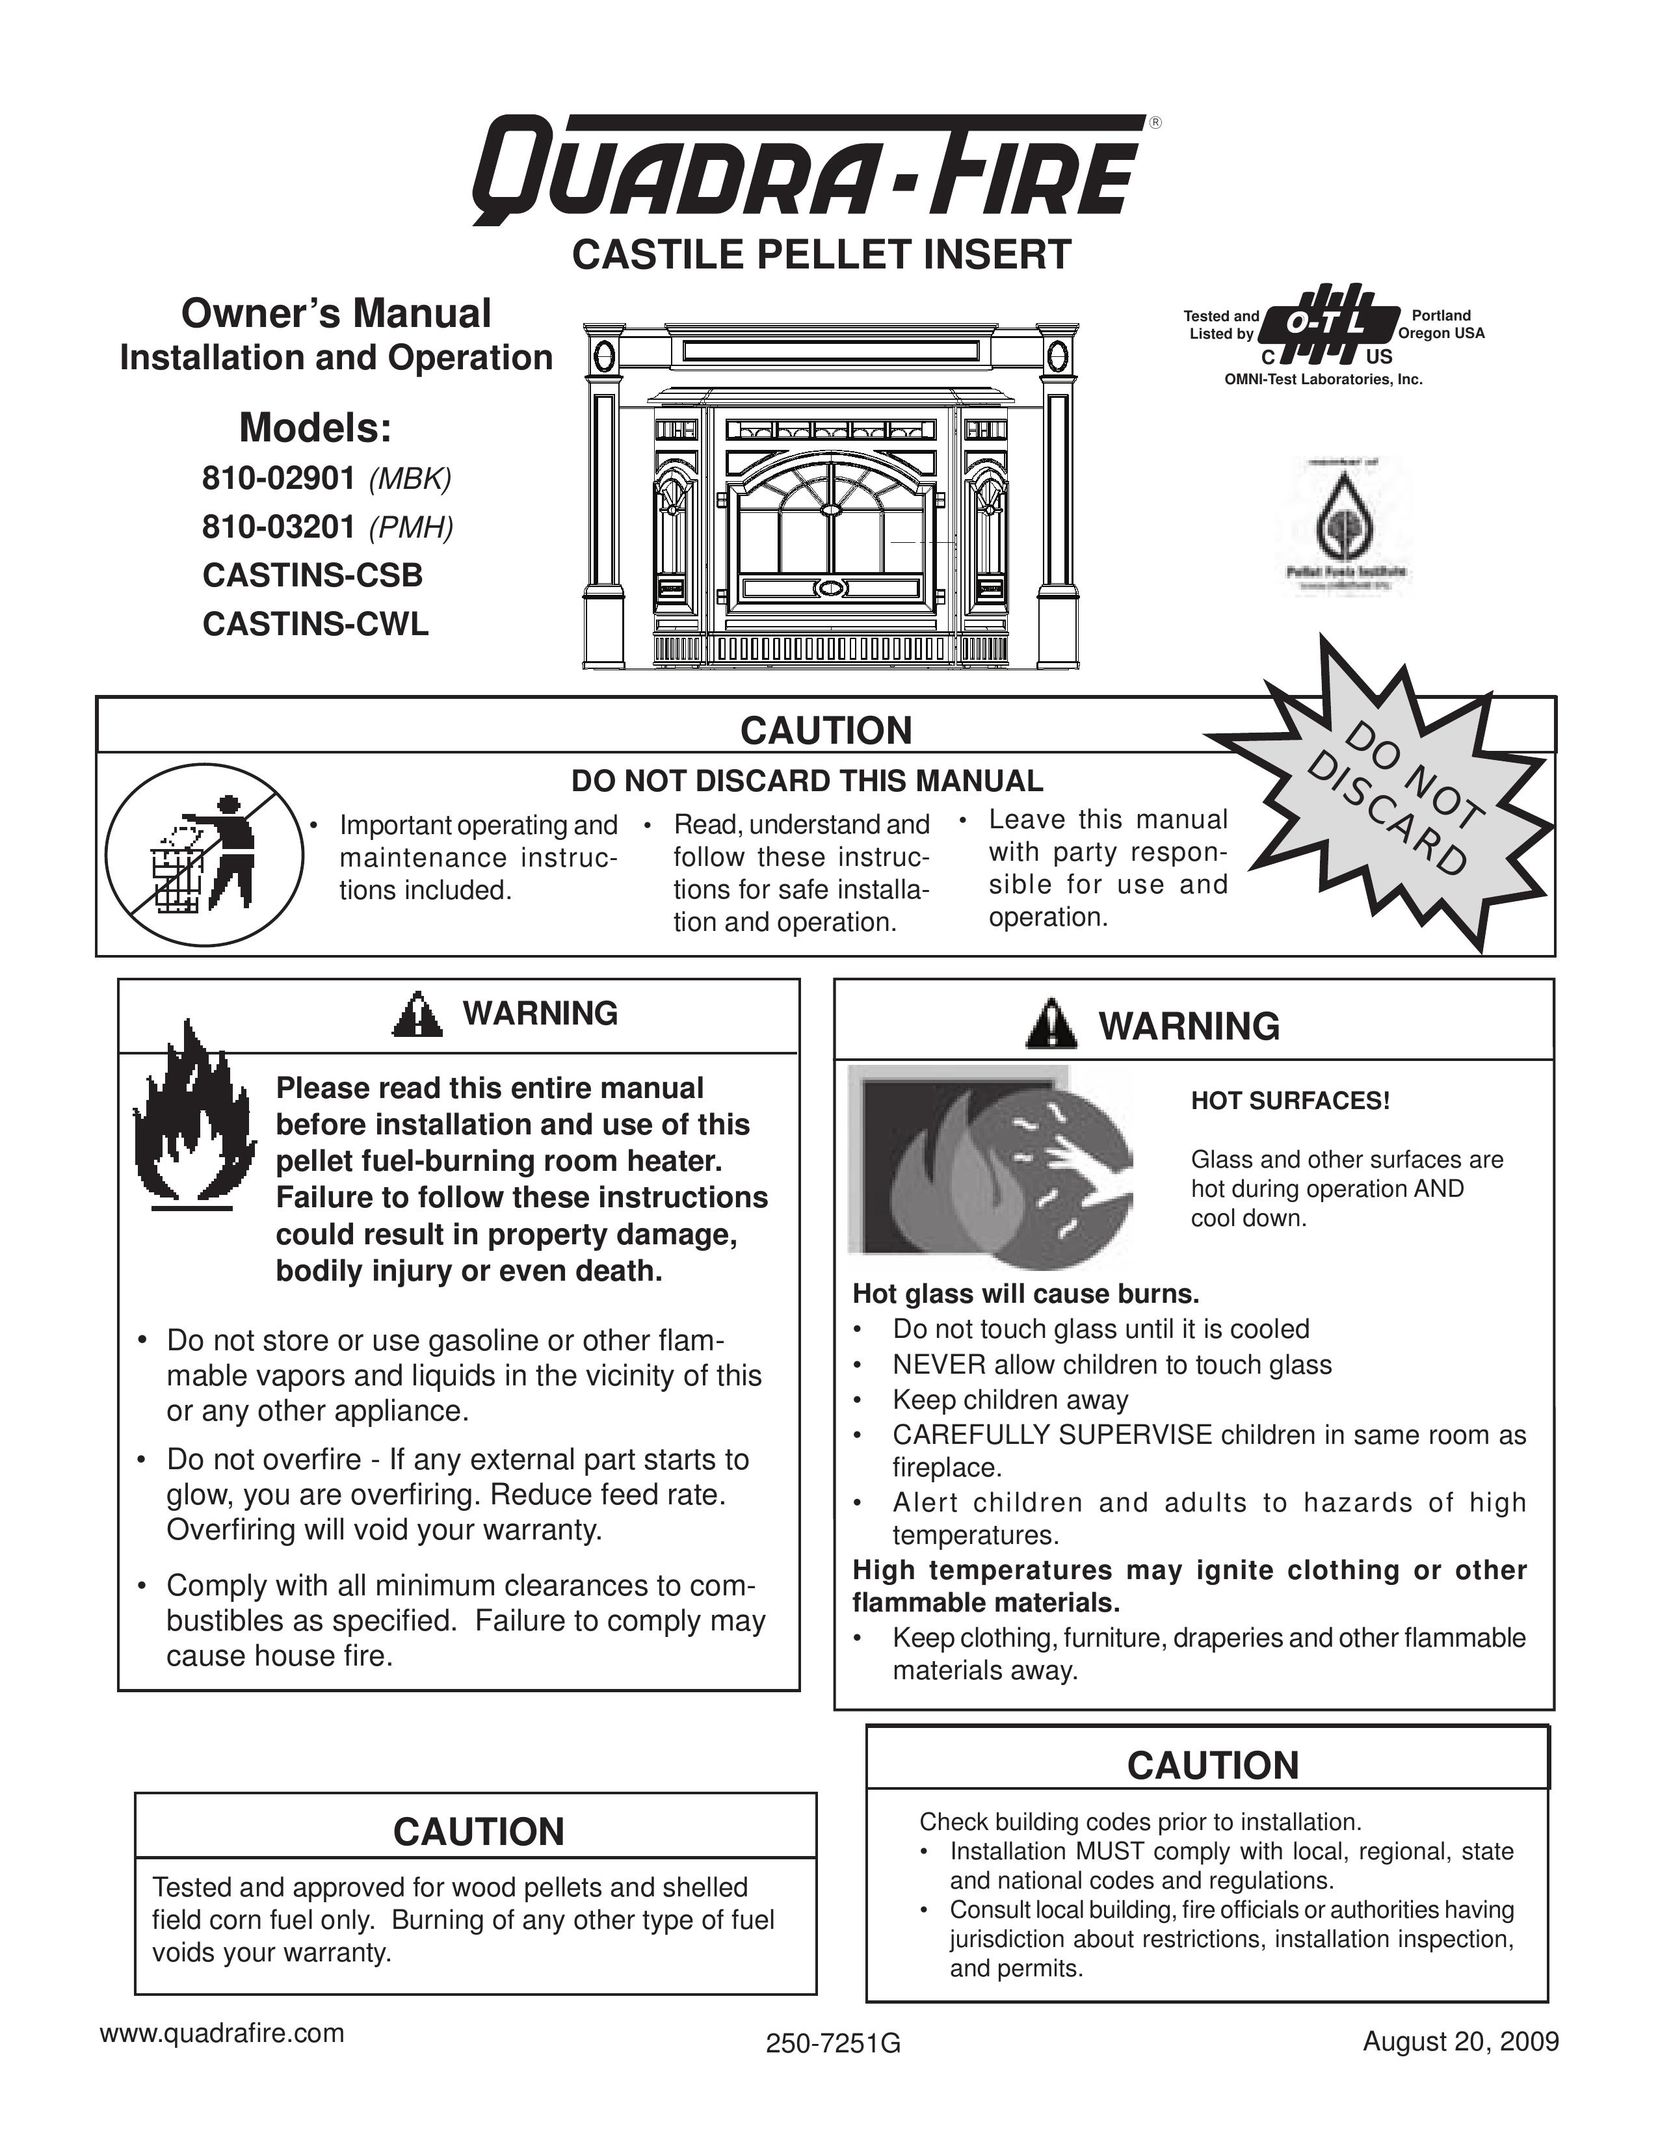 Quadra-Fire CASTINS-CWL Indoor Fireplace User Manual